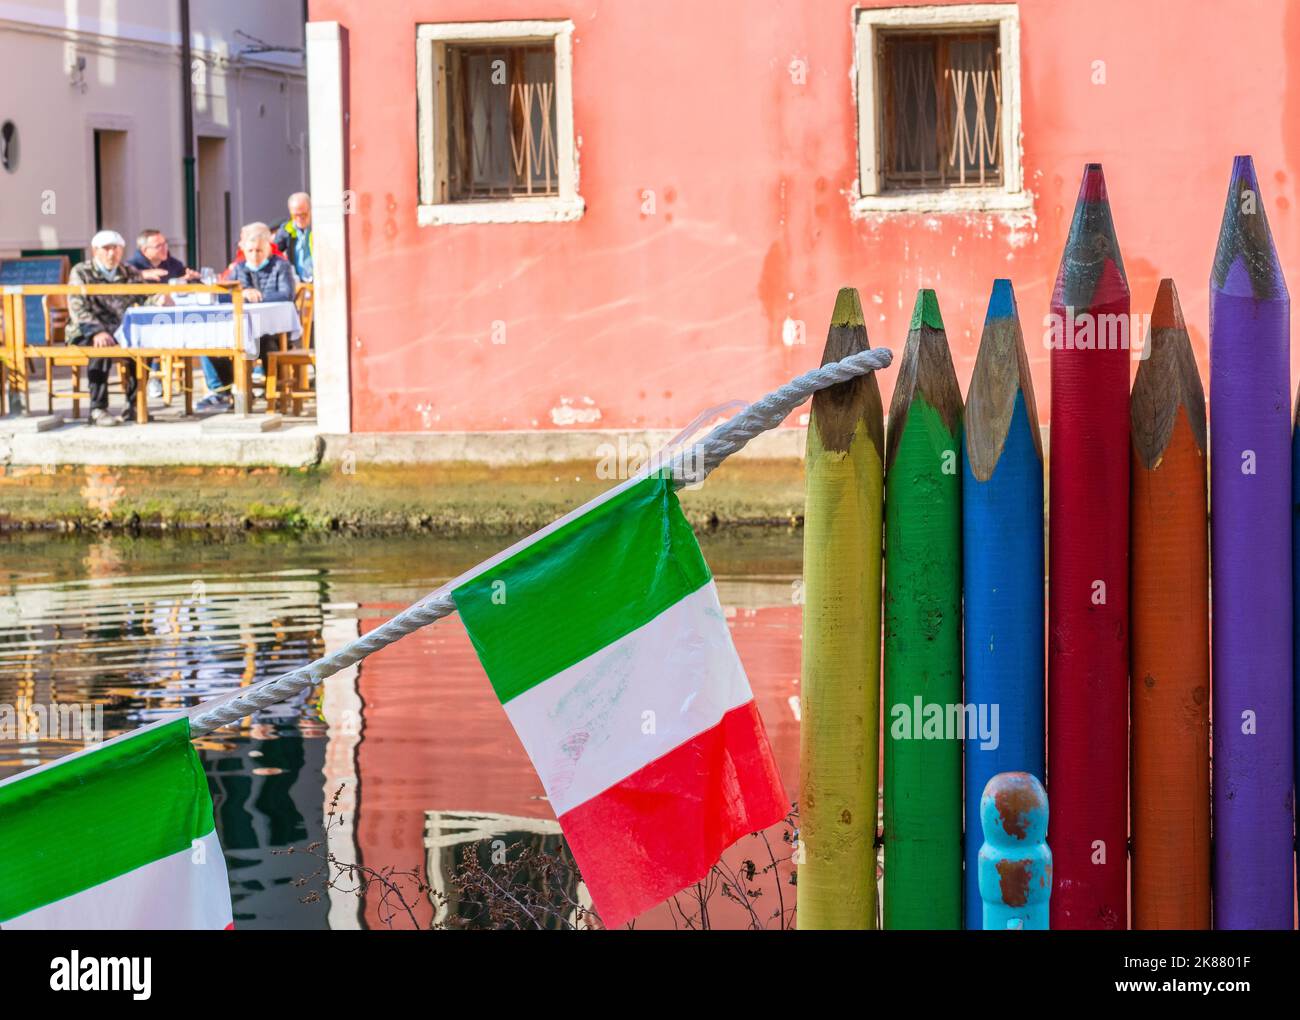 Chioggia glimpse from the arcades along the canals - Chioggia city, Venetian Lagoon, Verona province, Italy Stock Photo